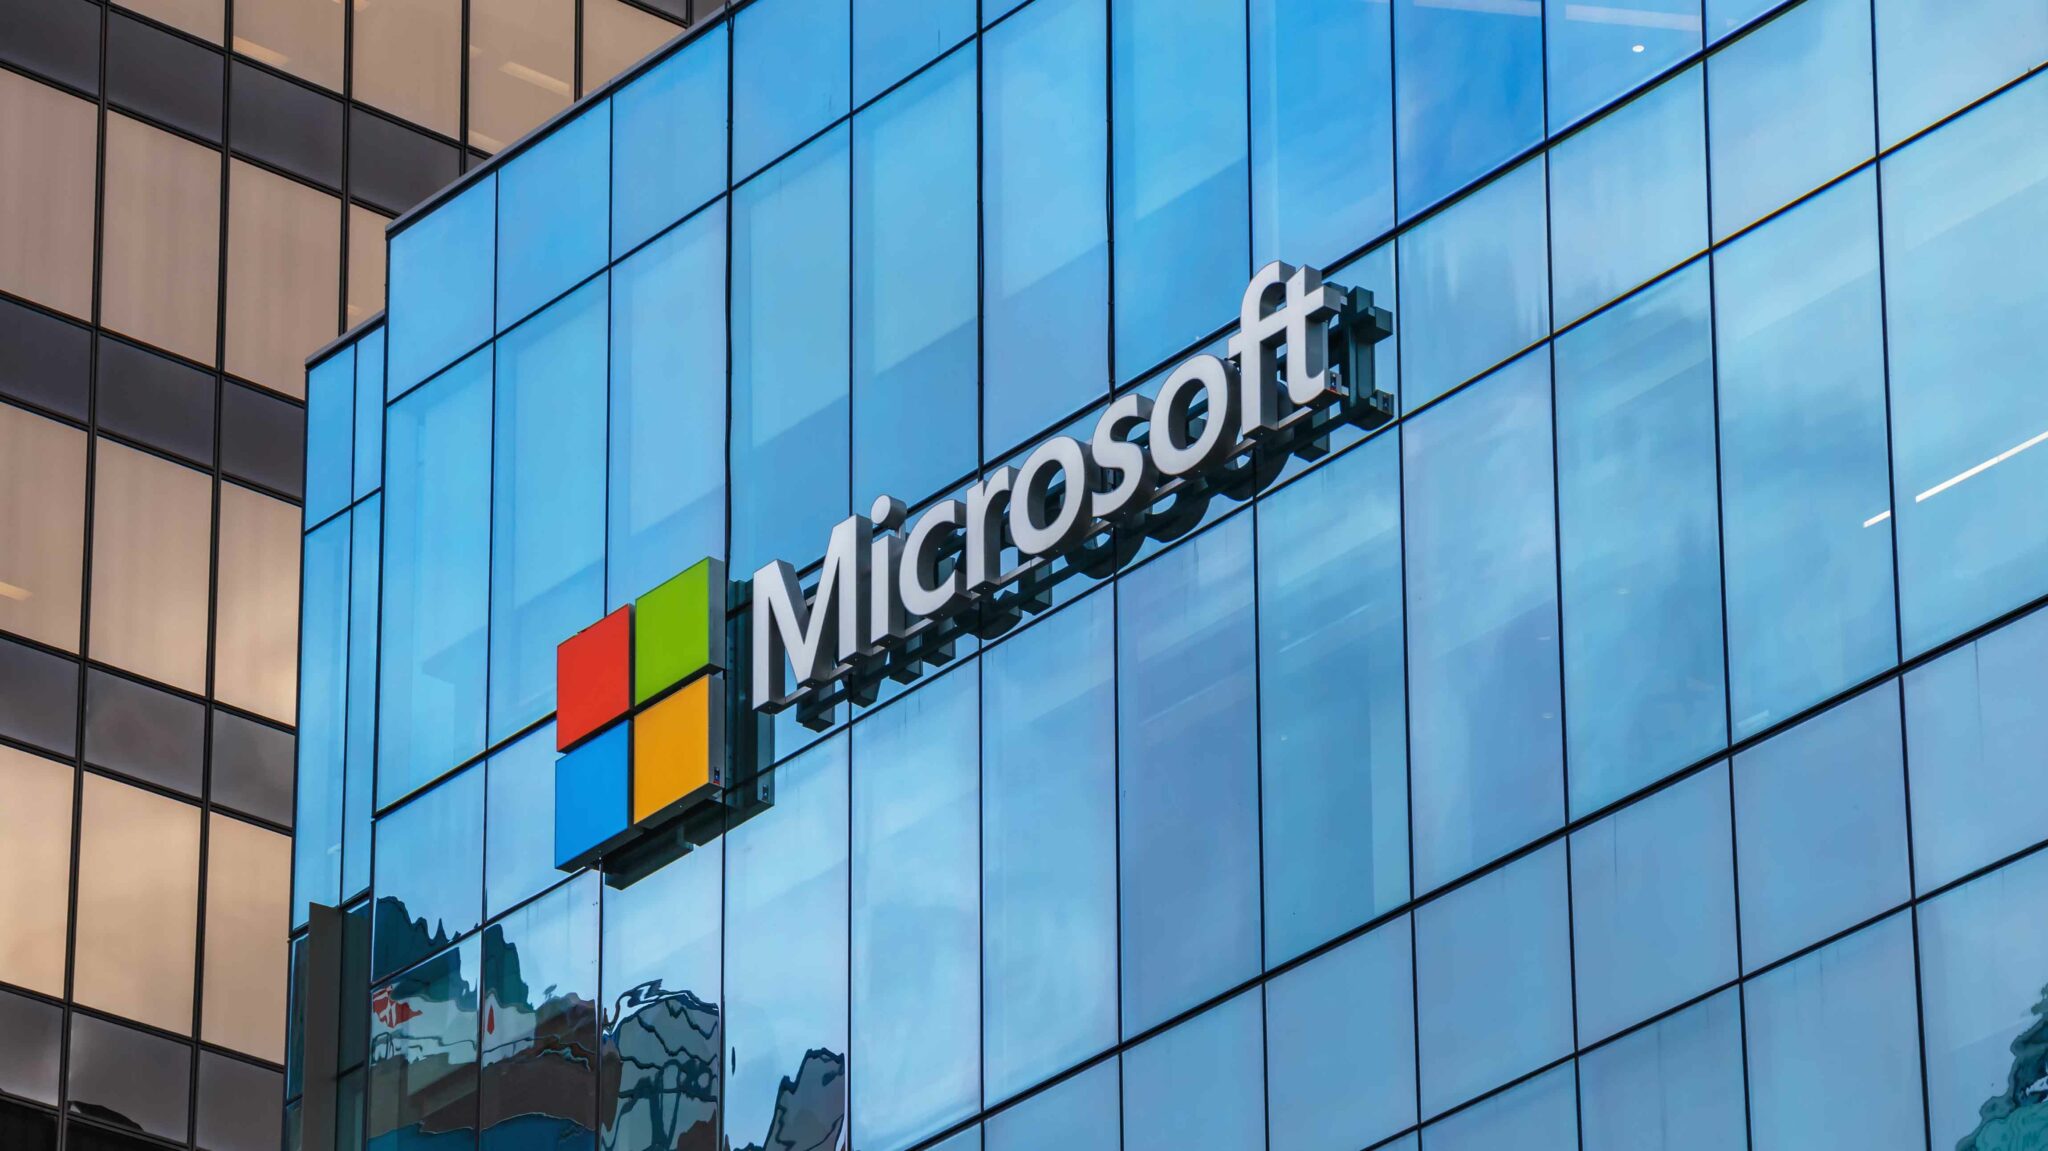 FTC regulators reportedly set to sue to block Microsoft-Activision